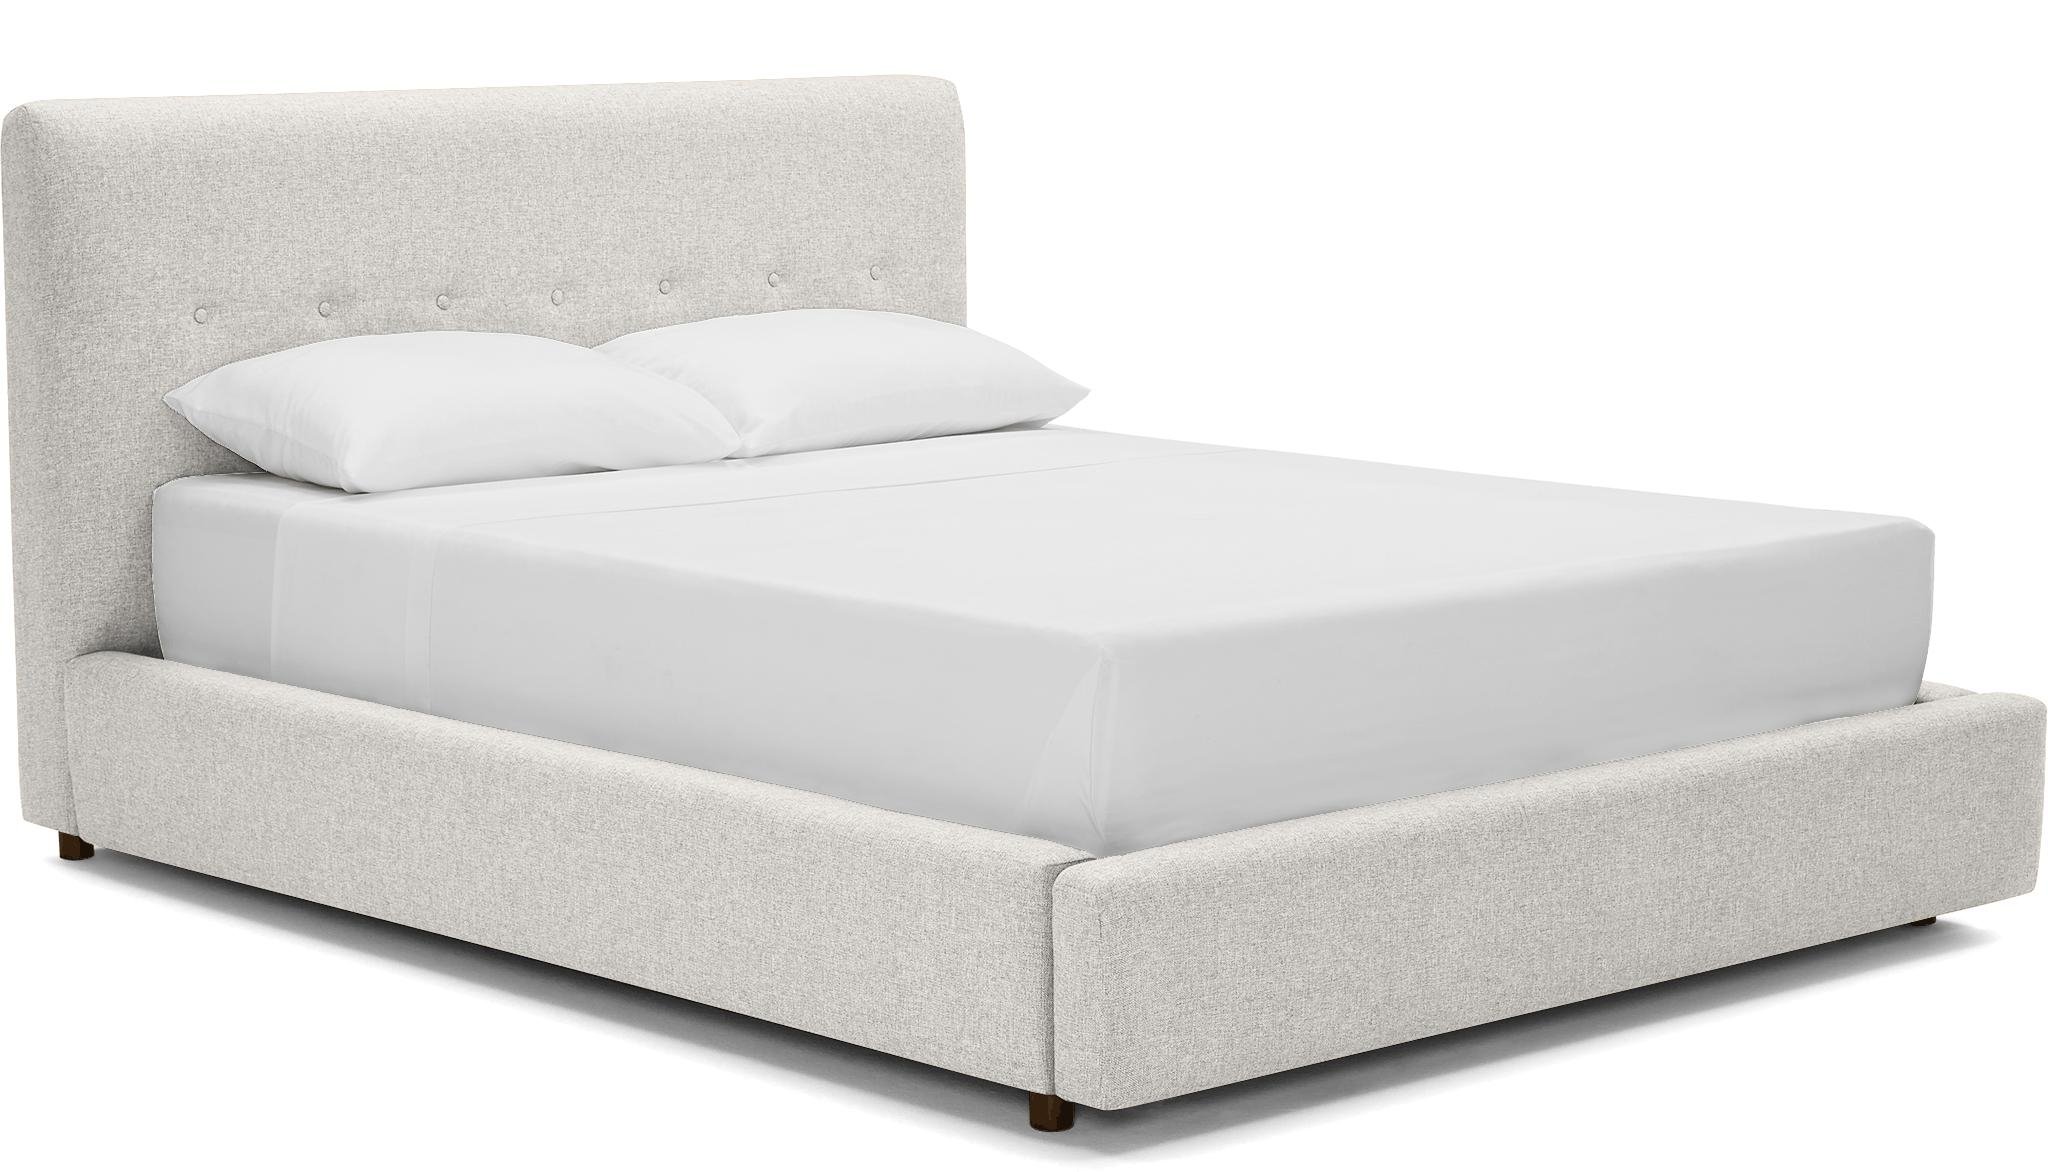 White Alvin Mid Century Modern Storage Bed - Tussah Snow - Mocha - Cal King - Image 1